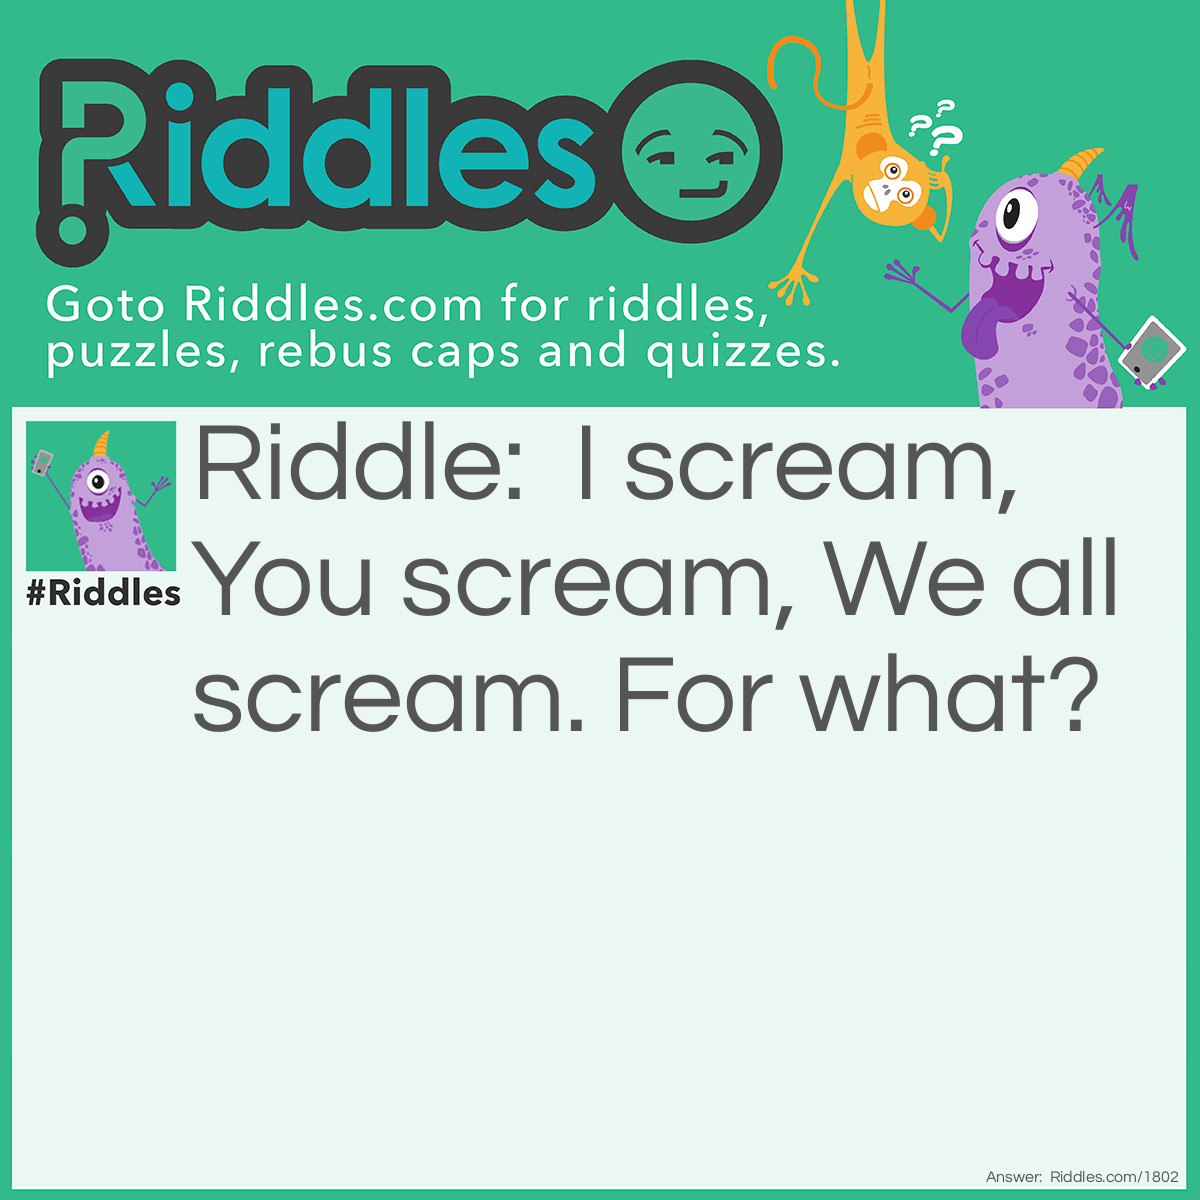 Riddle: I scream,
You scream,
We all scream.
For what? Answer: Ice cream.